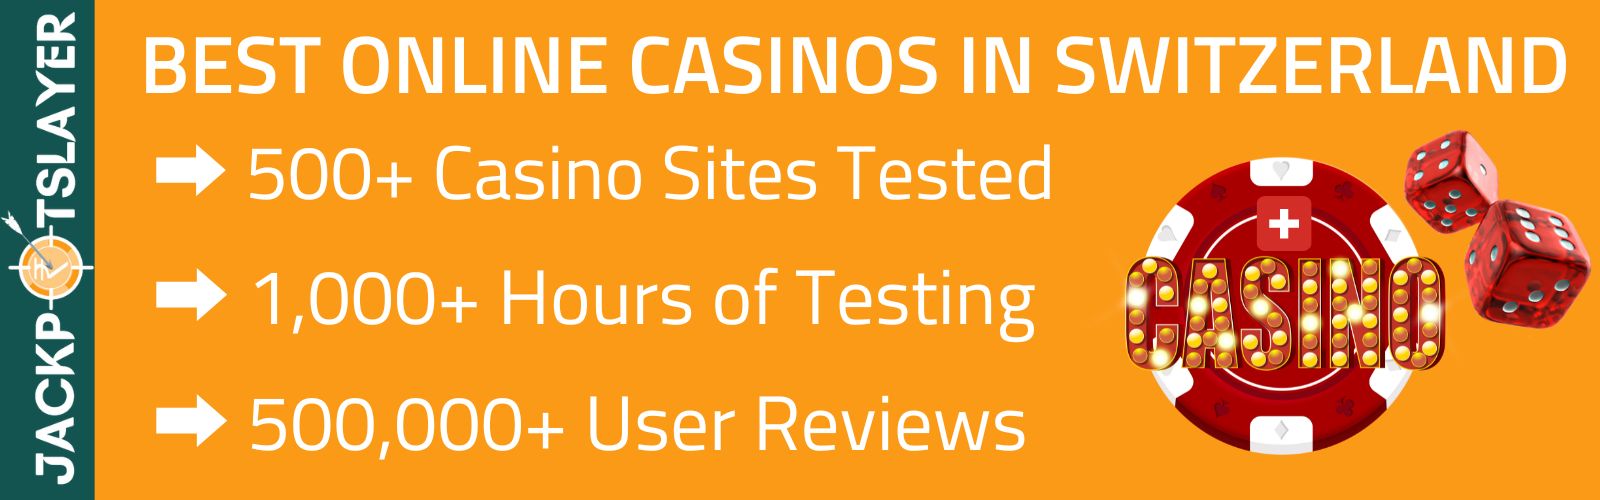 Best Online Casinos in Switzerland